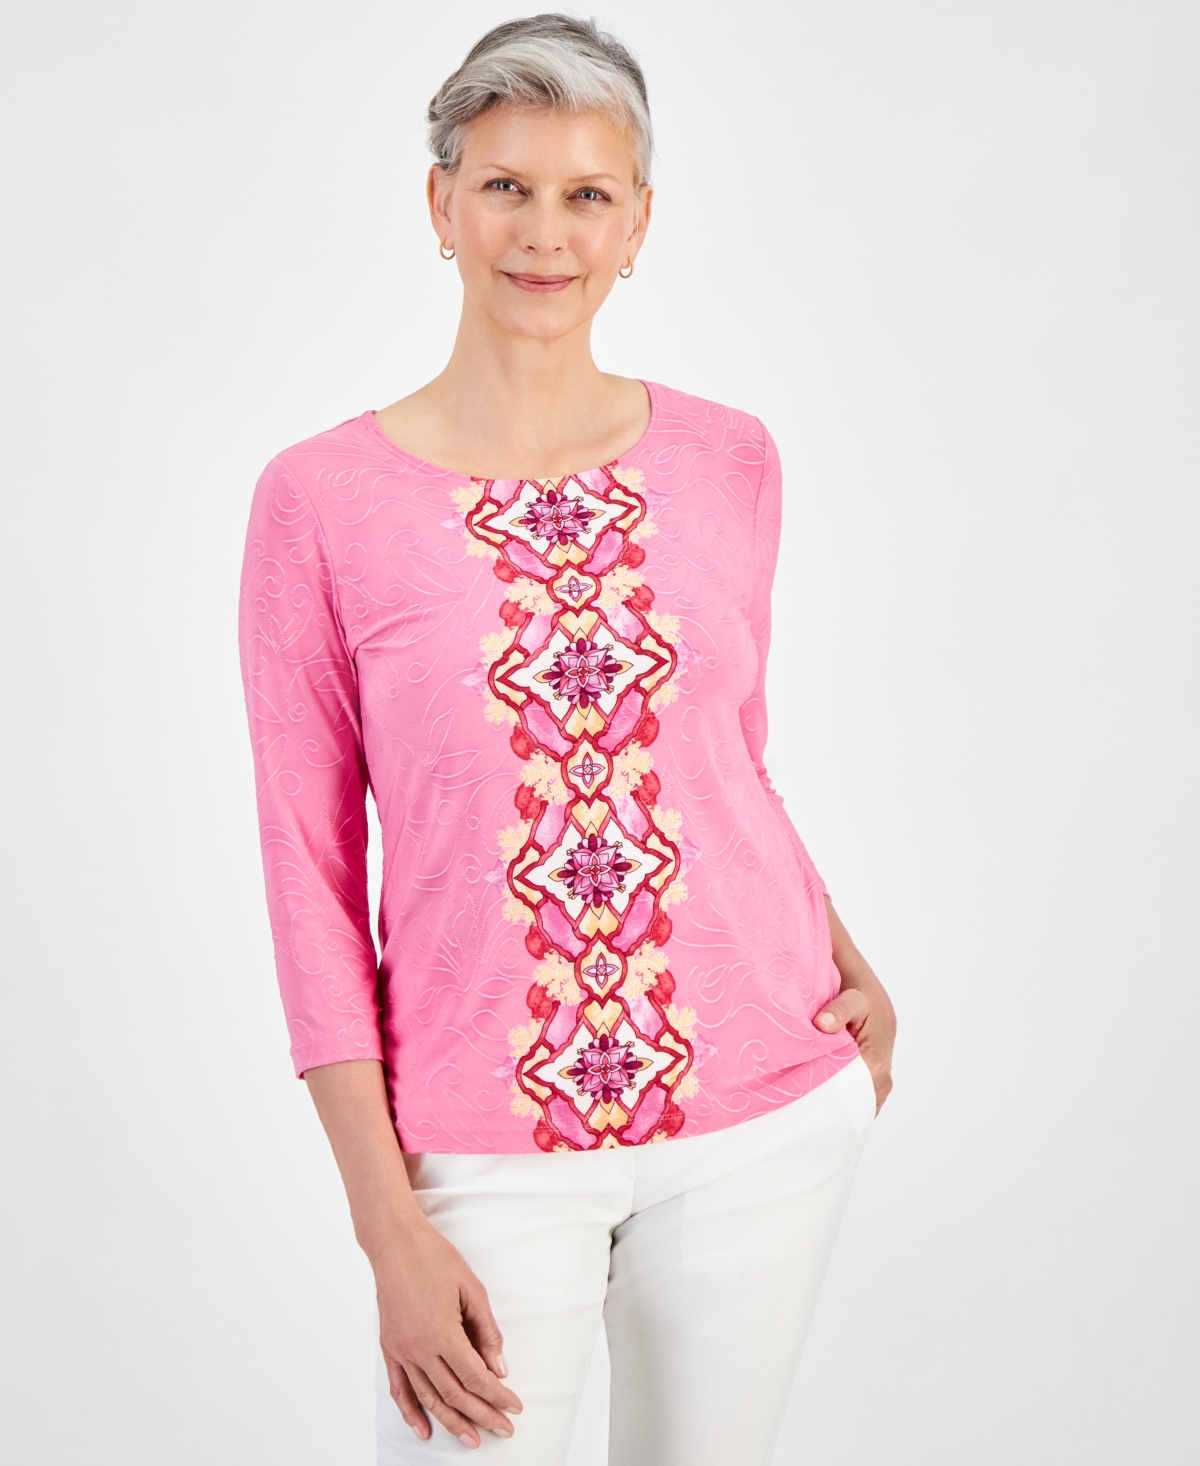 Women's Jacquard Printed 3/4-Sleeve Top, Created for Macy's - Phlox Pink Combo